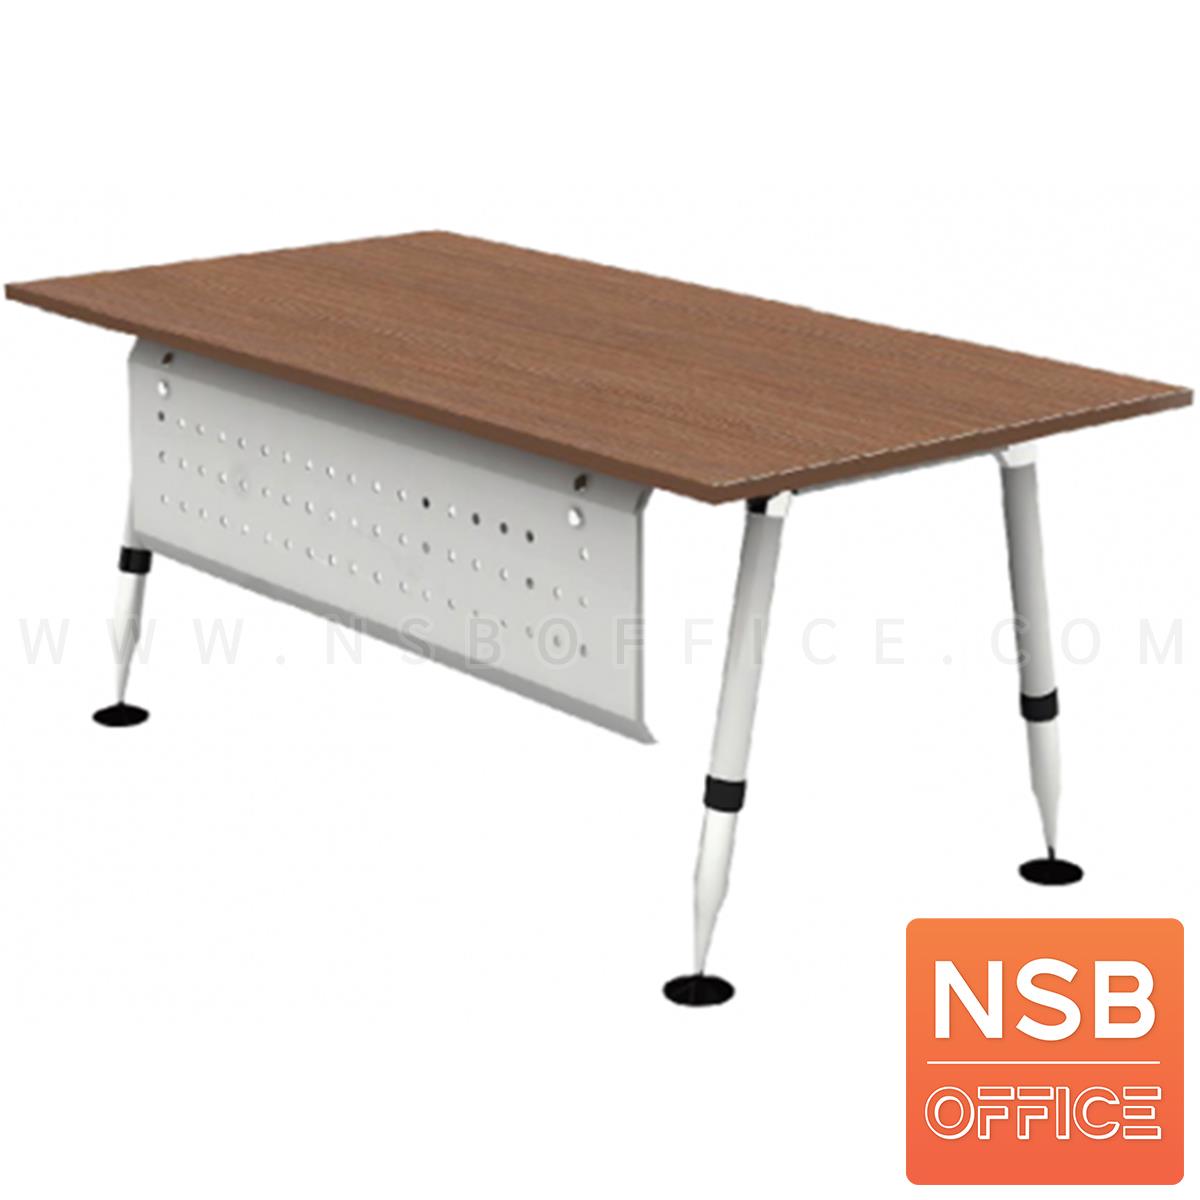 A29A001:โต๊ะผู้บริหารทรงสี่เหลี่ยม รุ่น HB-DK04-1890  ขนาด 180W cm. ขาเหล็กสีขาวปลายโครเมียม